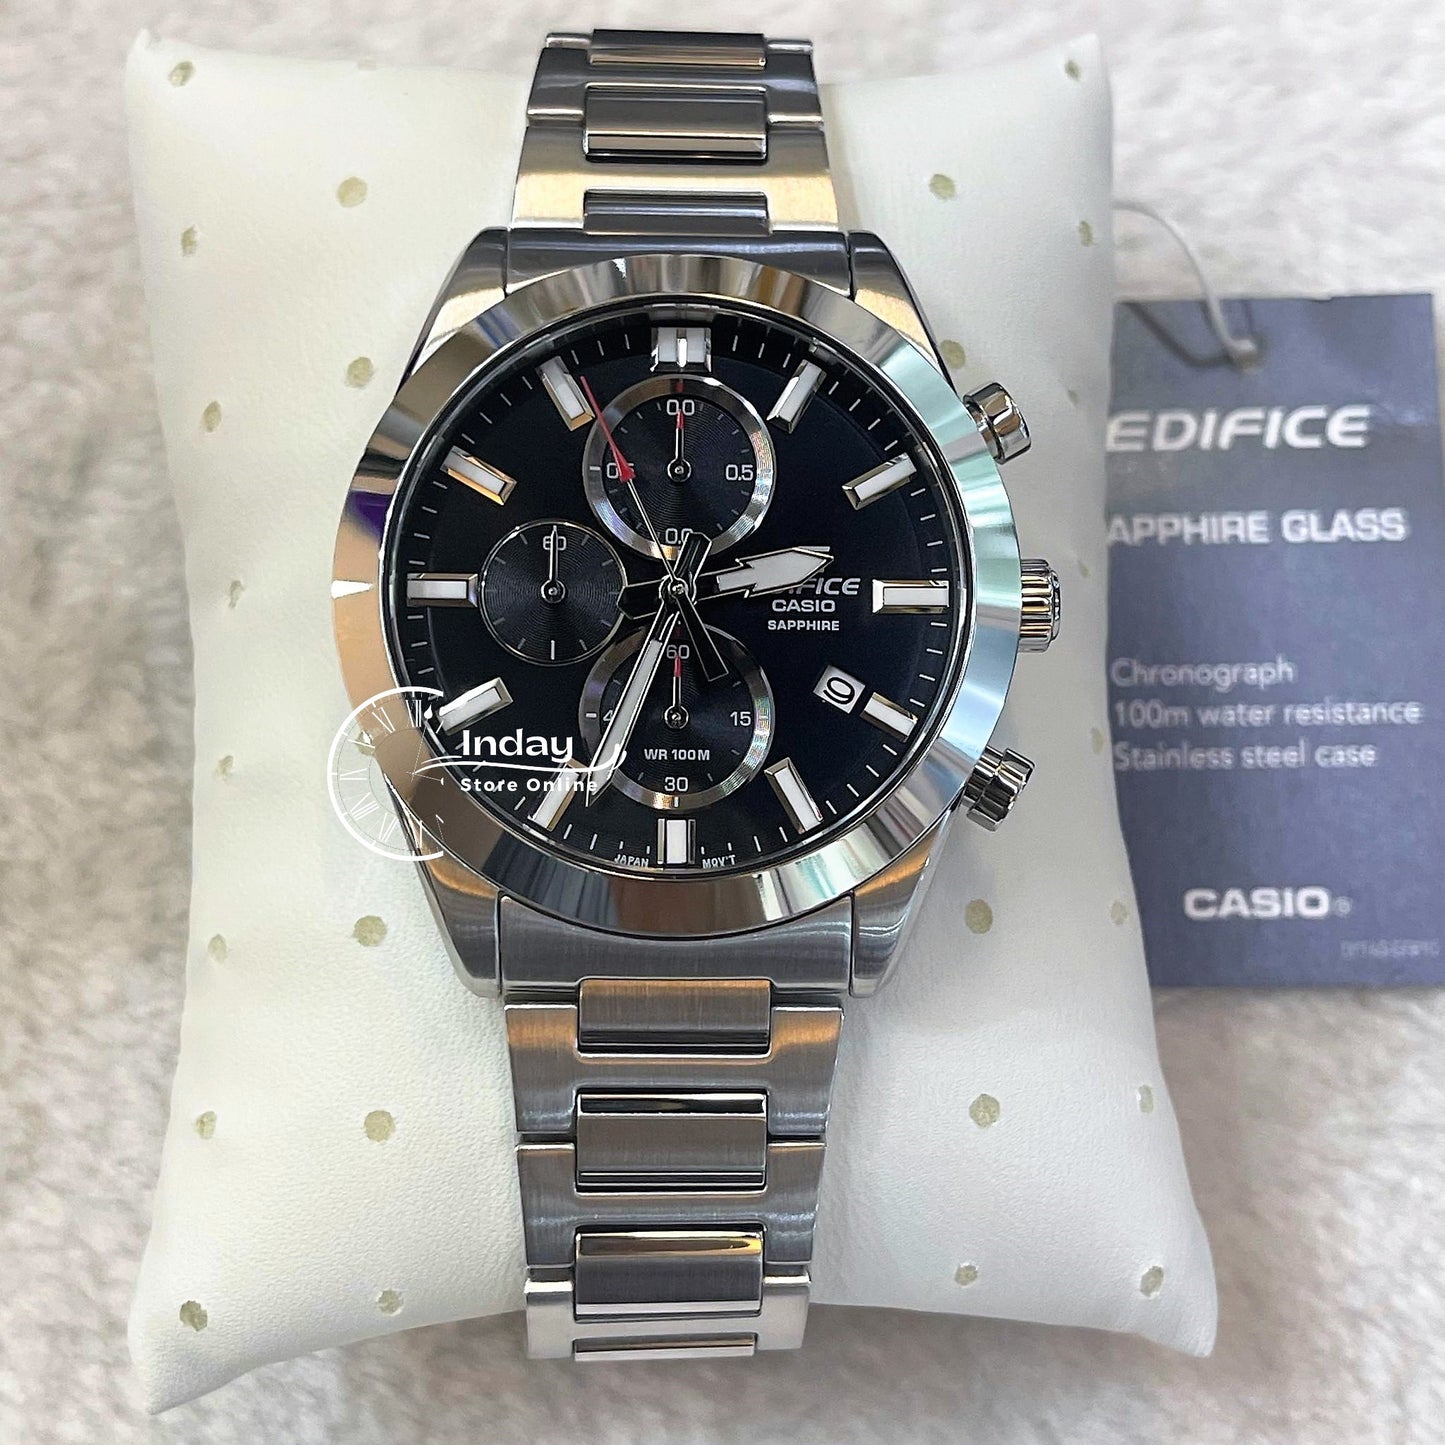 Casio Edifice Men's Watch EFB-710D-1A